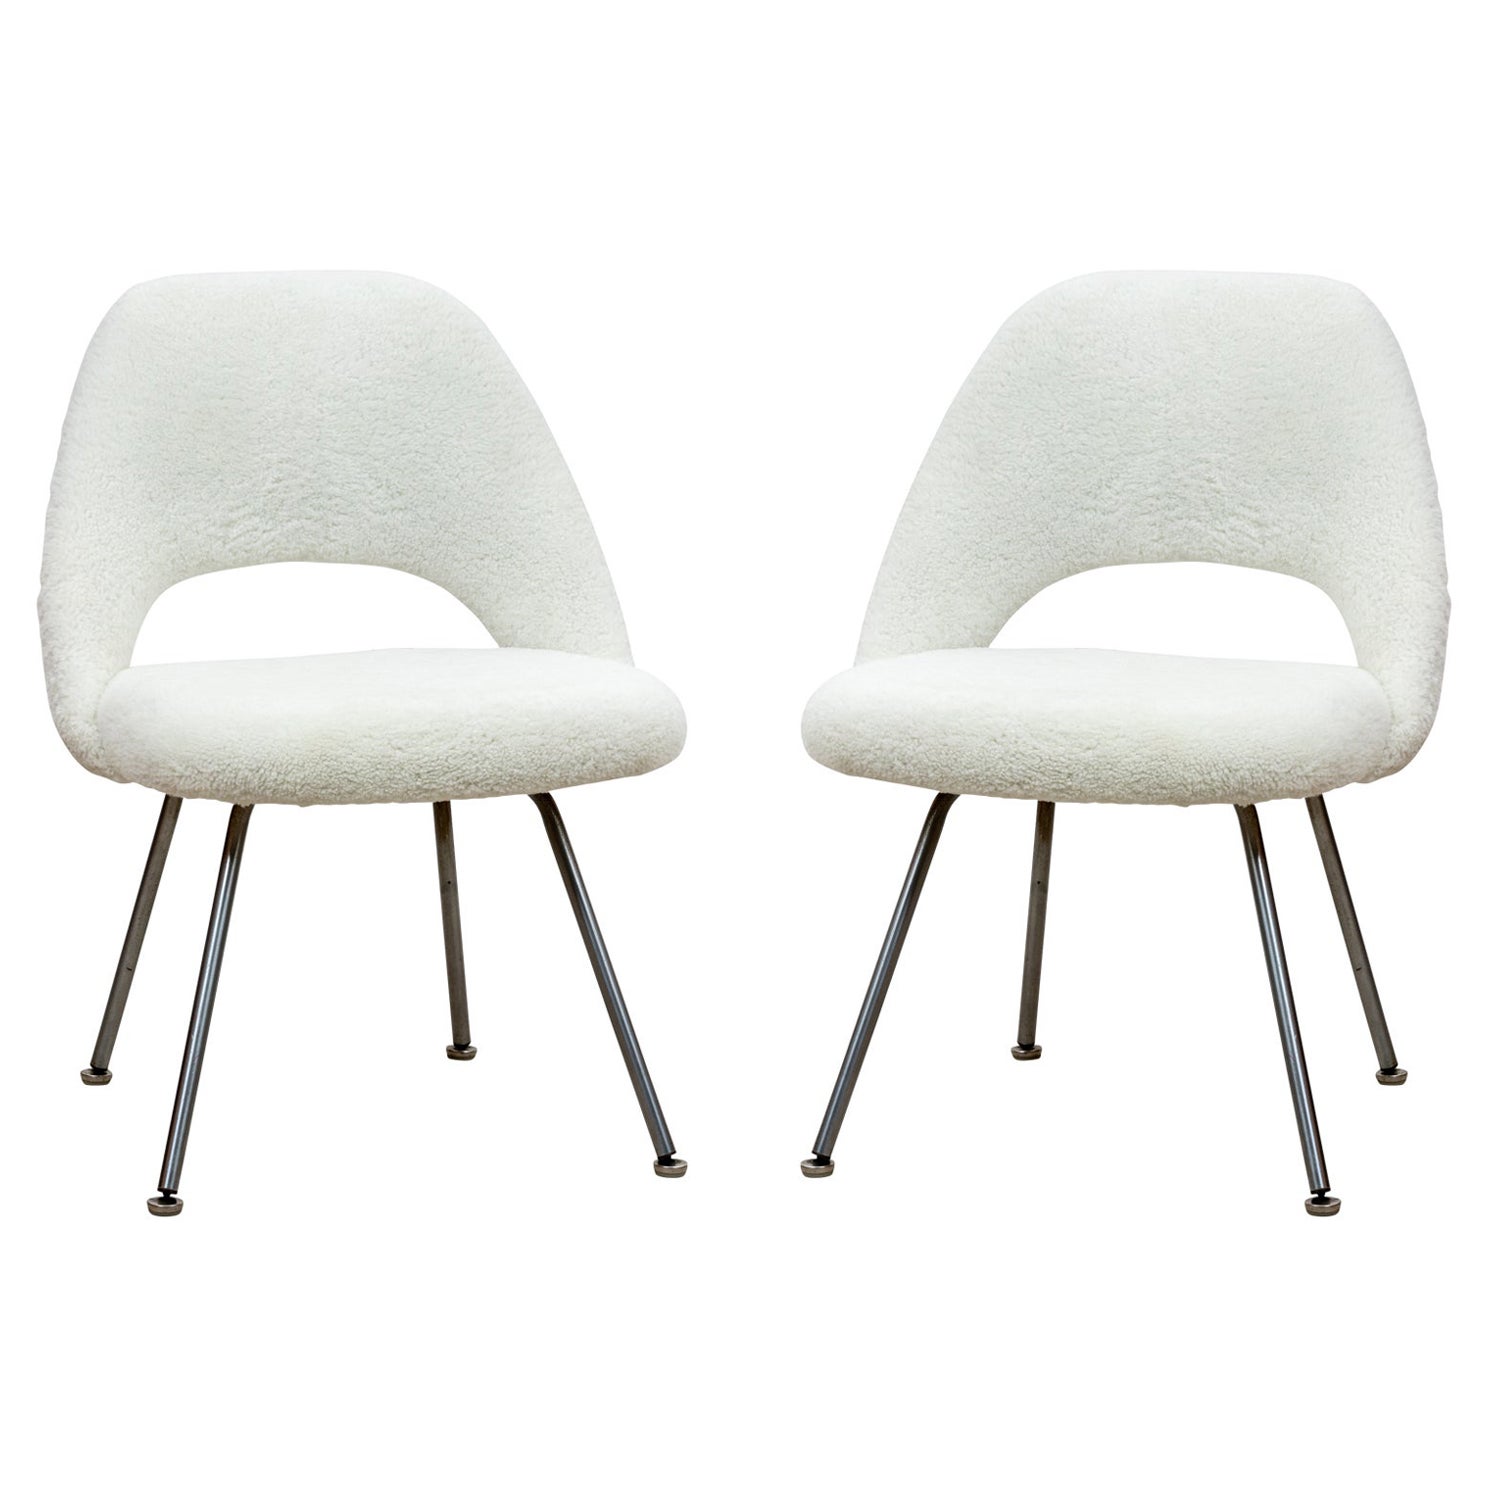 Pair of Knoll Saarinen Shearling Chairs